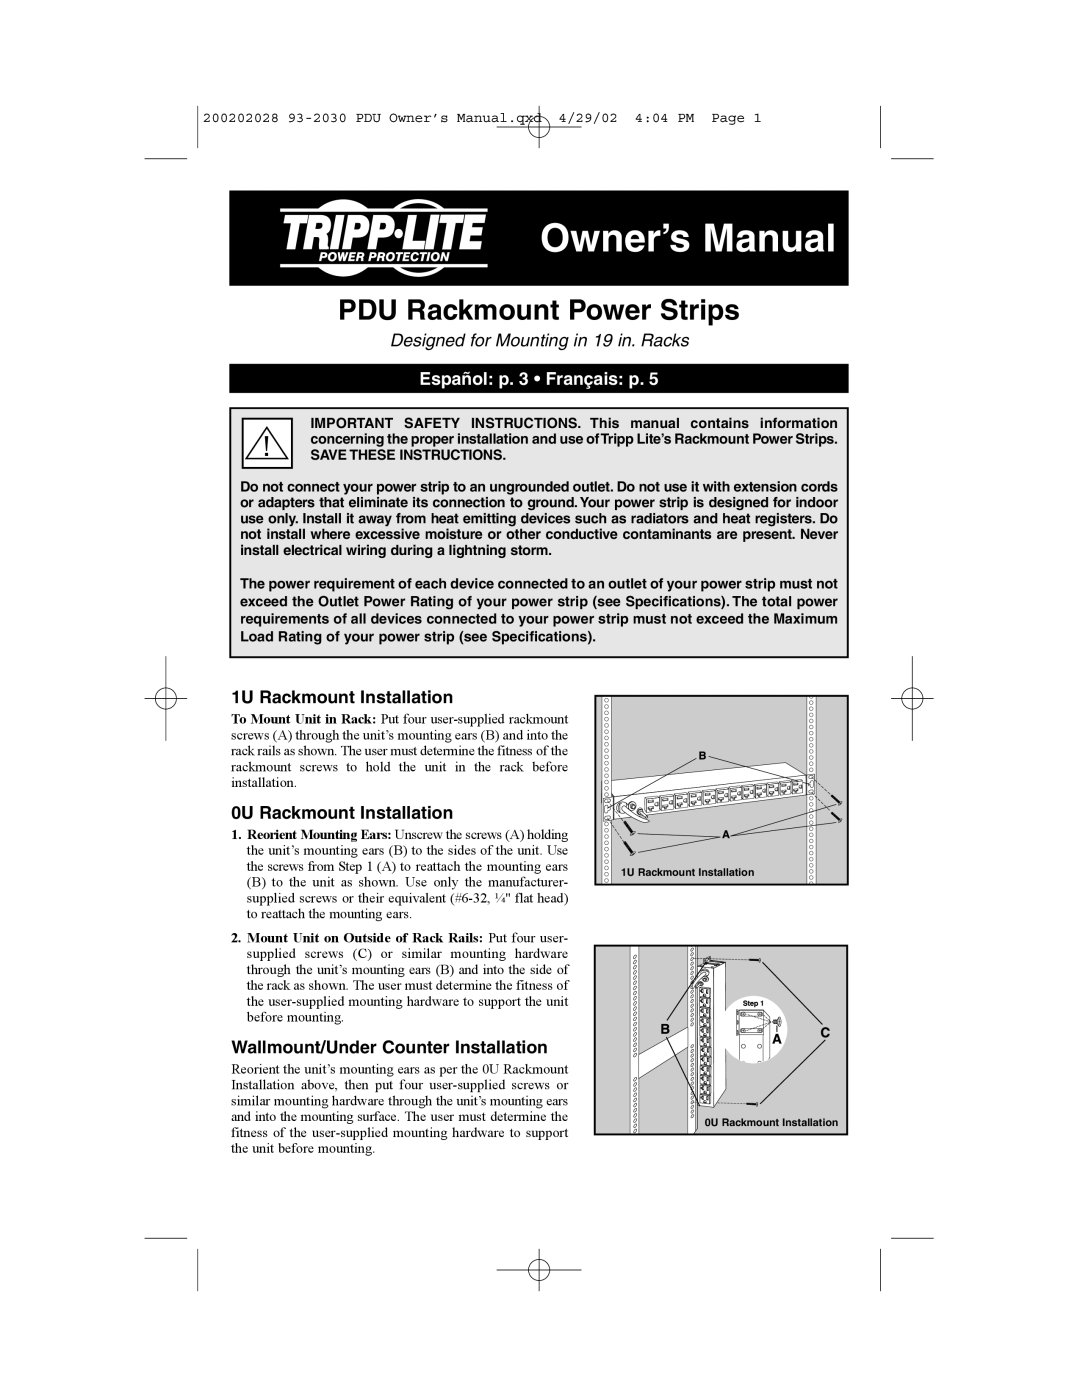 Tripp Lite PDU Rackmount Power Strips owner manual Owner’s Manual, Designed for Mounting in 19 in. Racks 